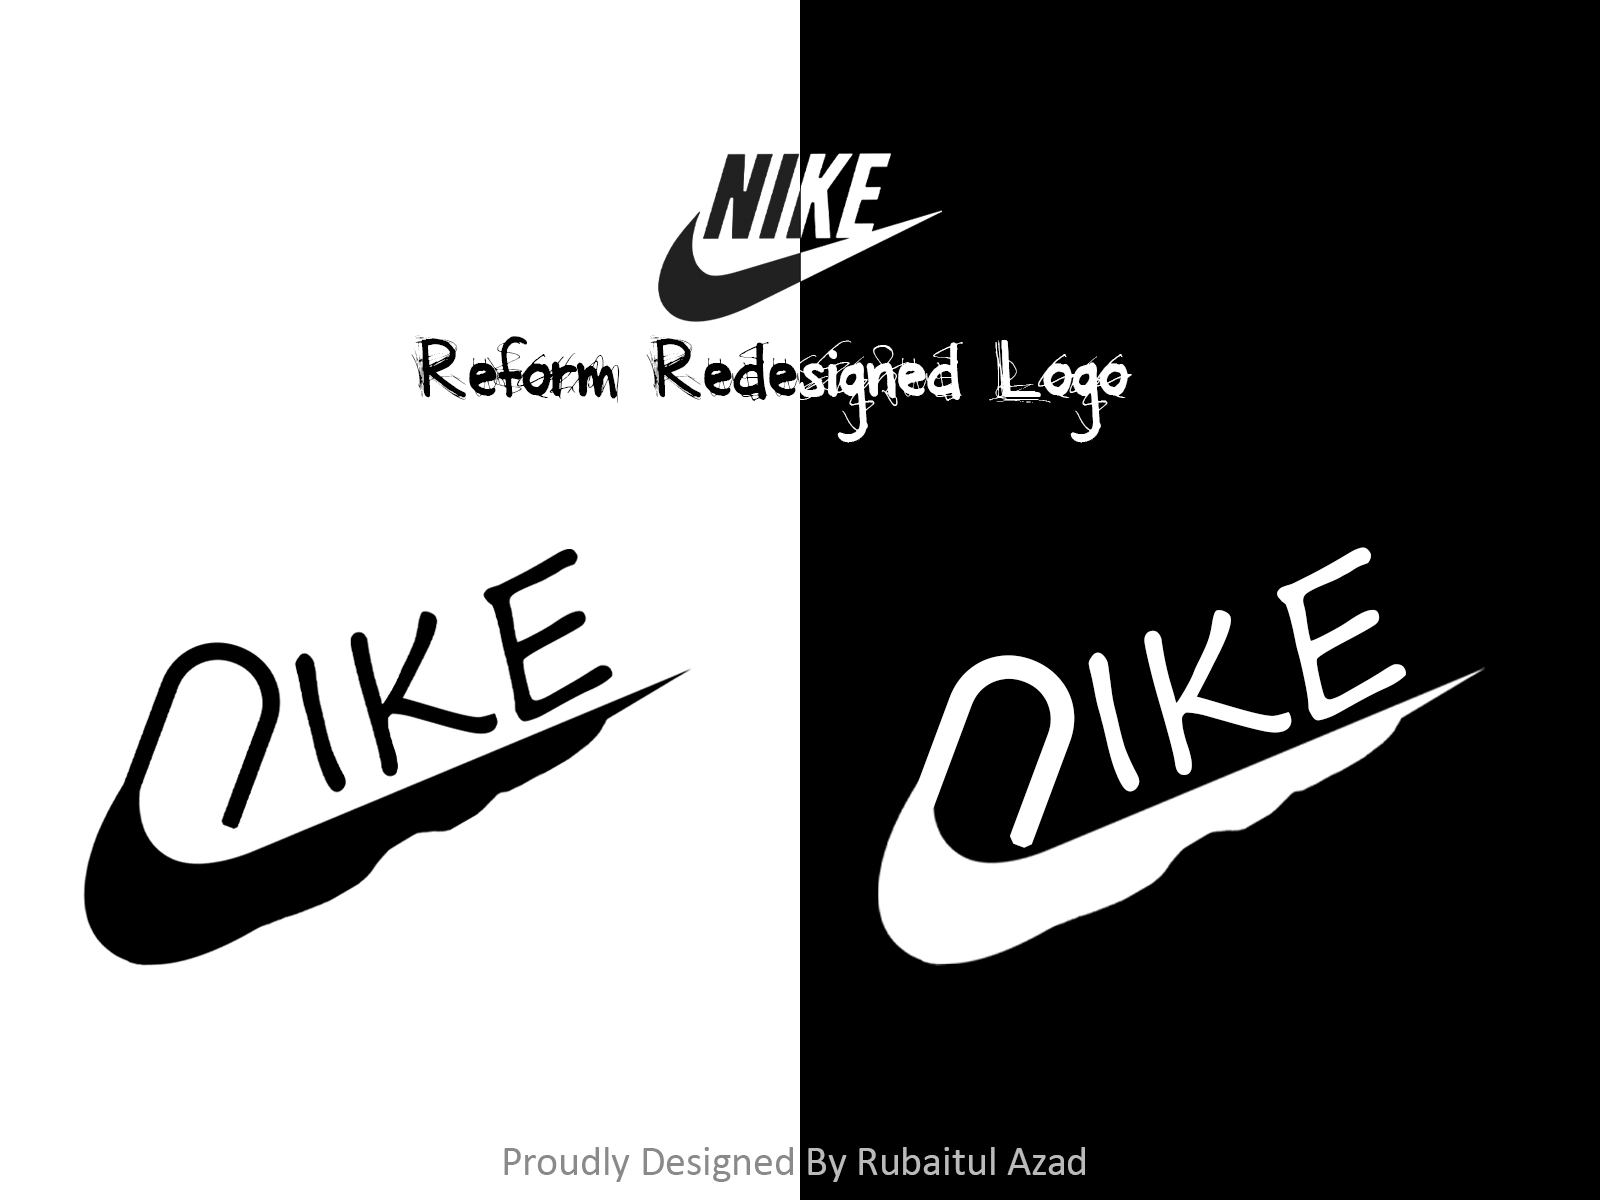 Pakistán artículo obturador Nike reform redesigned logo by Rubaitul Azad on Dribbble